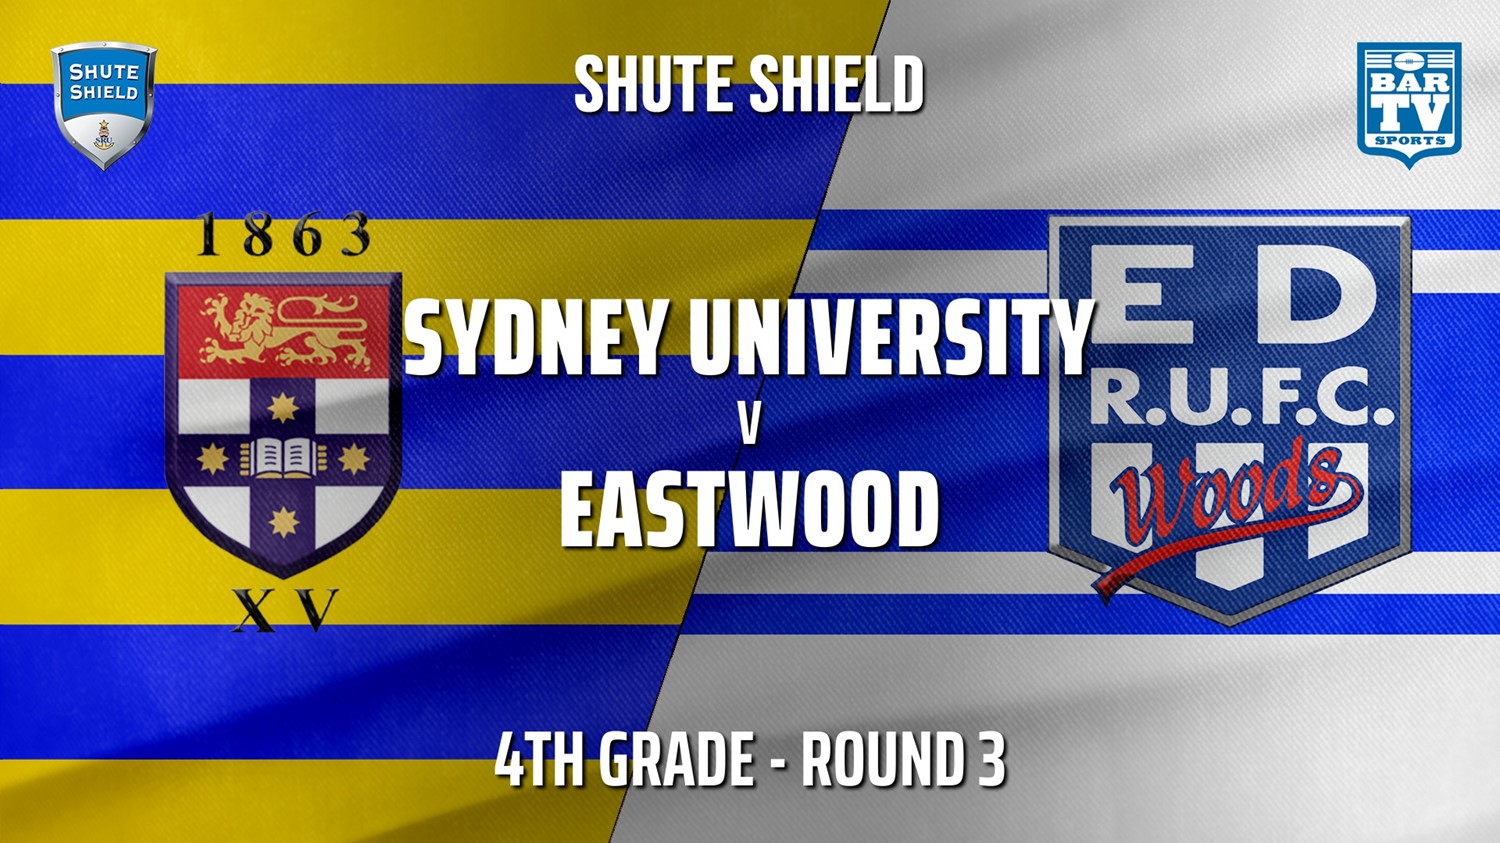 210421-Shute Shield Round 3 - 4th Grade - Sydney University v Eastwood (1) Minigame Slate Image